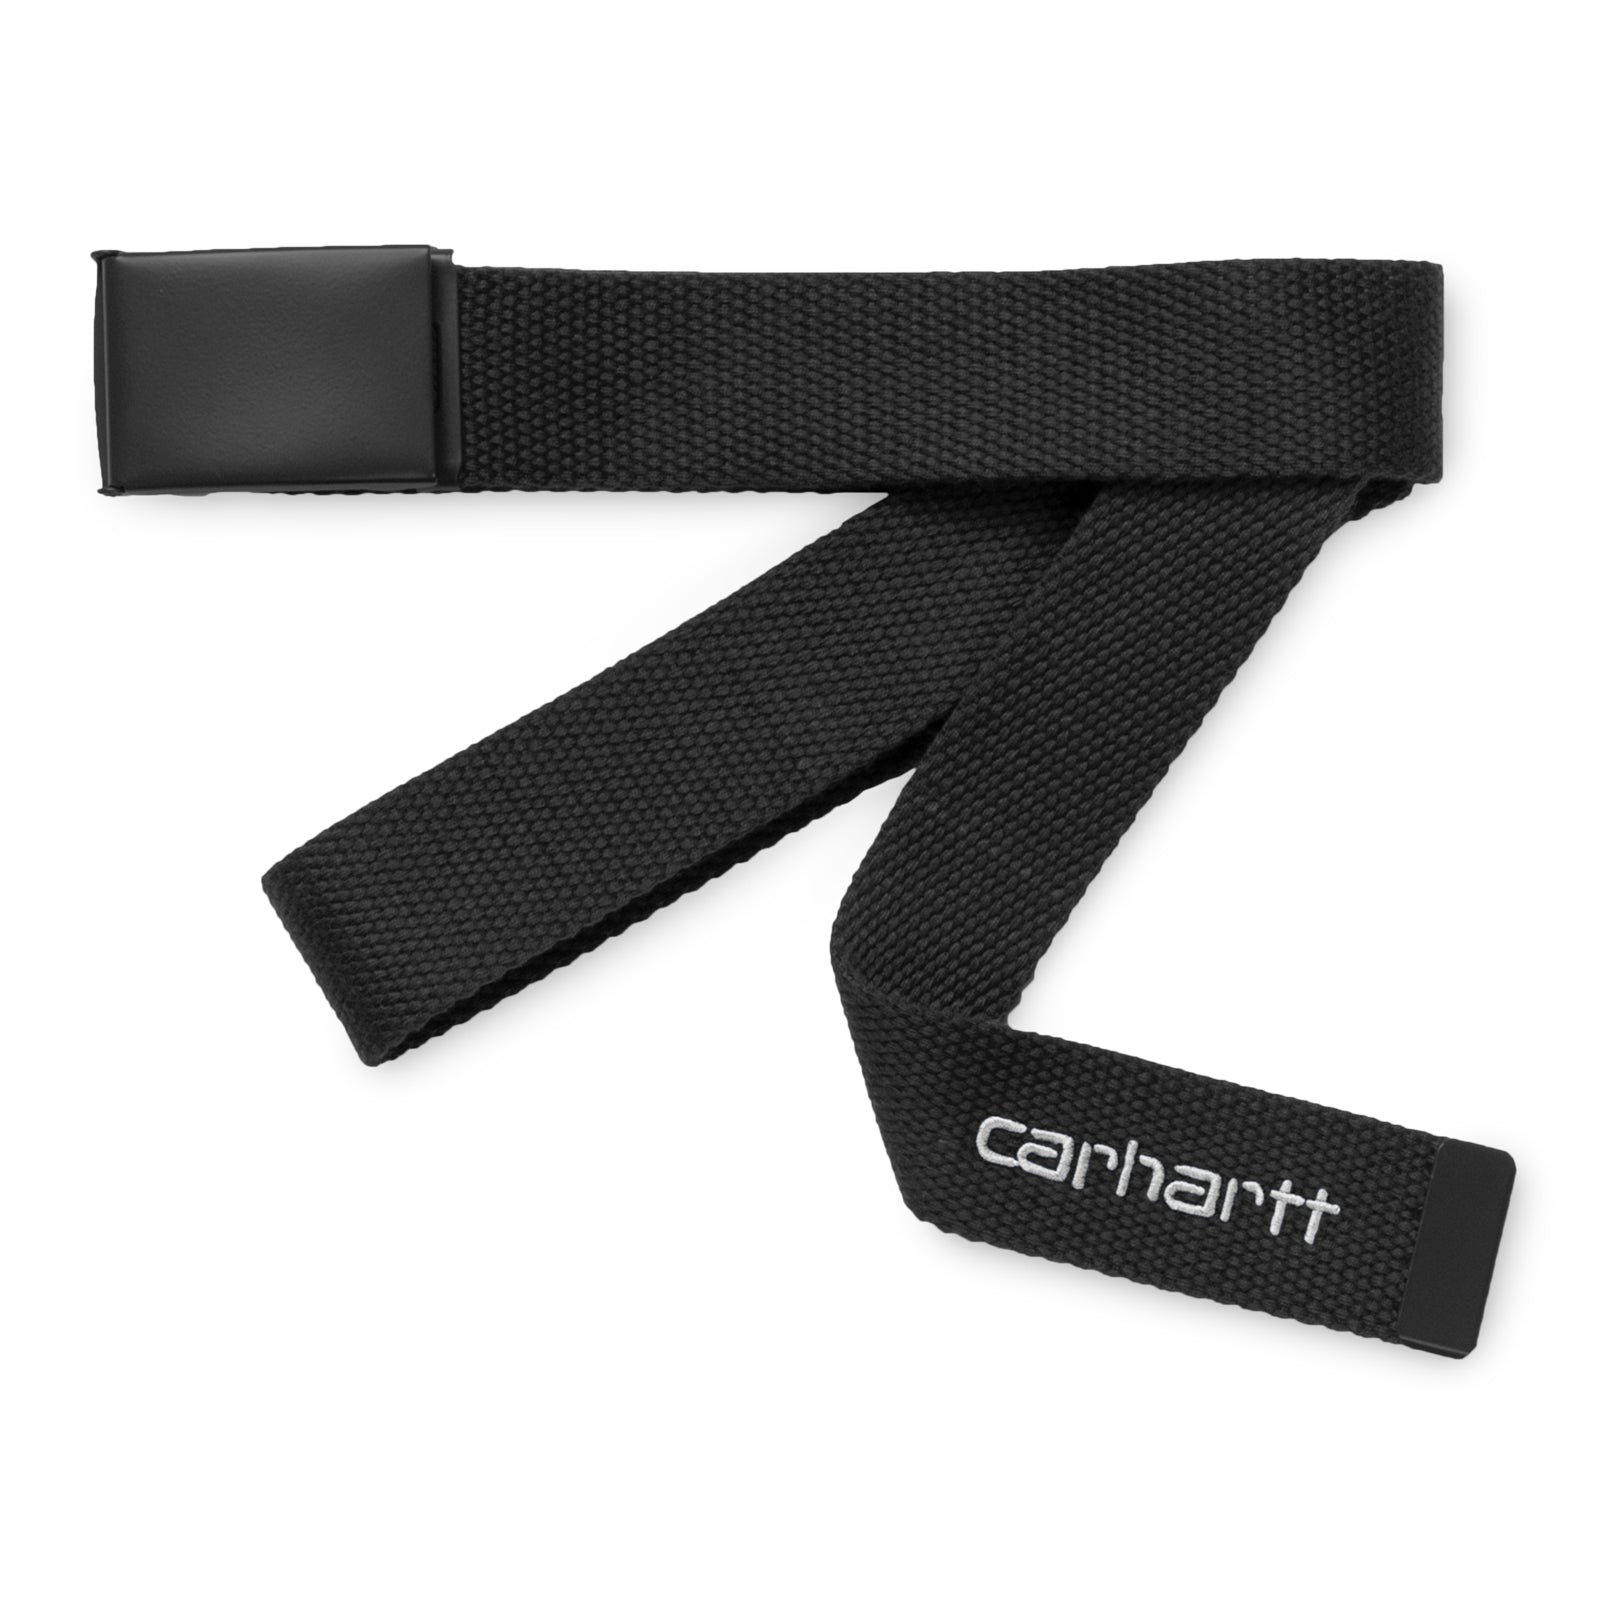 Carhartt WIP Script Belt Tonal Black/White. Foto do cinto.